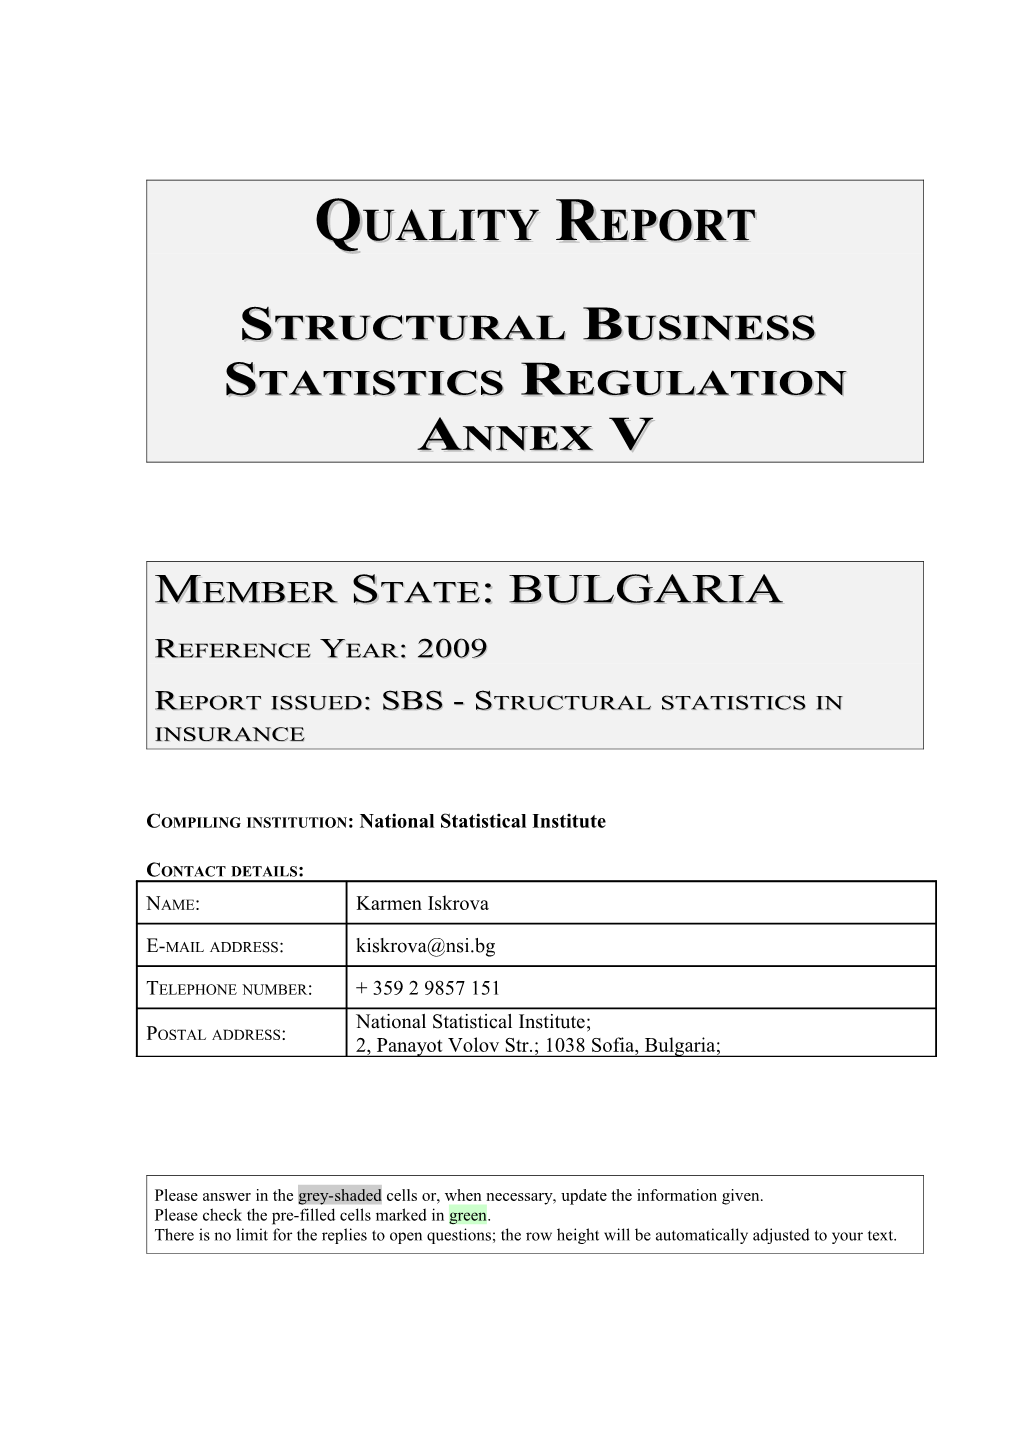 Structural Business Statistics Regulation Annex V